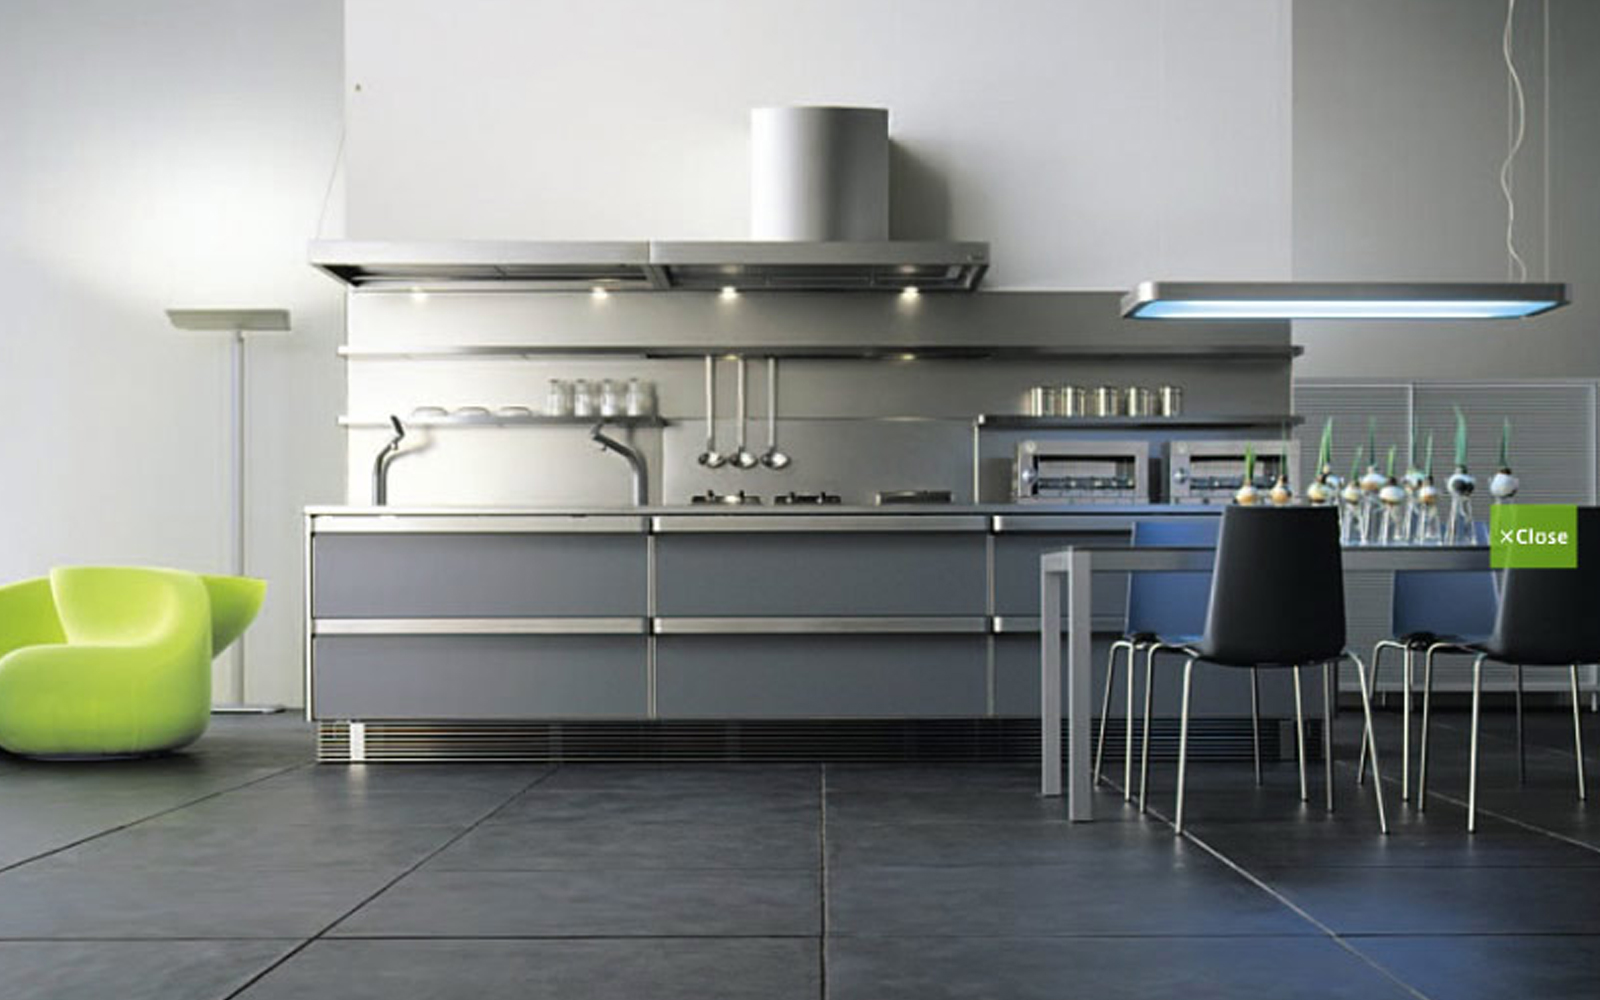 Stainless steal modular kitchen range
                                  